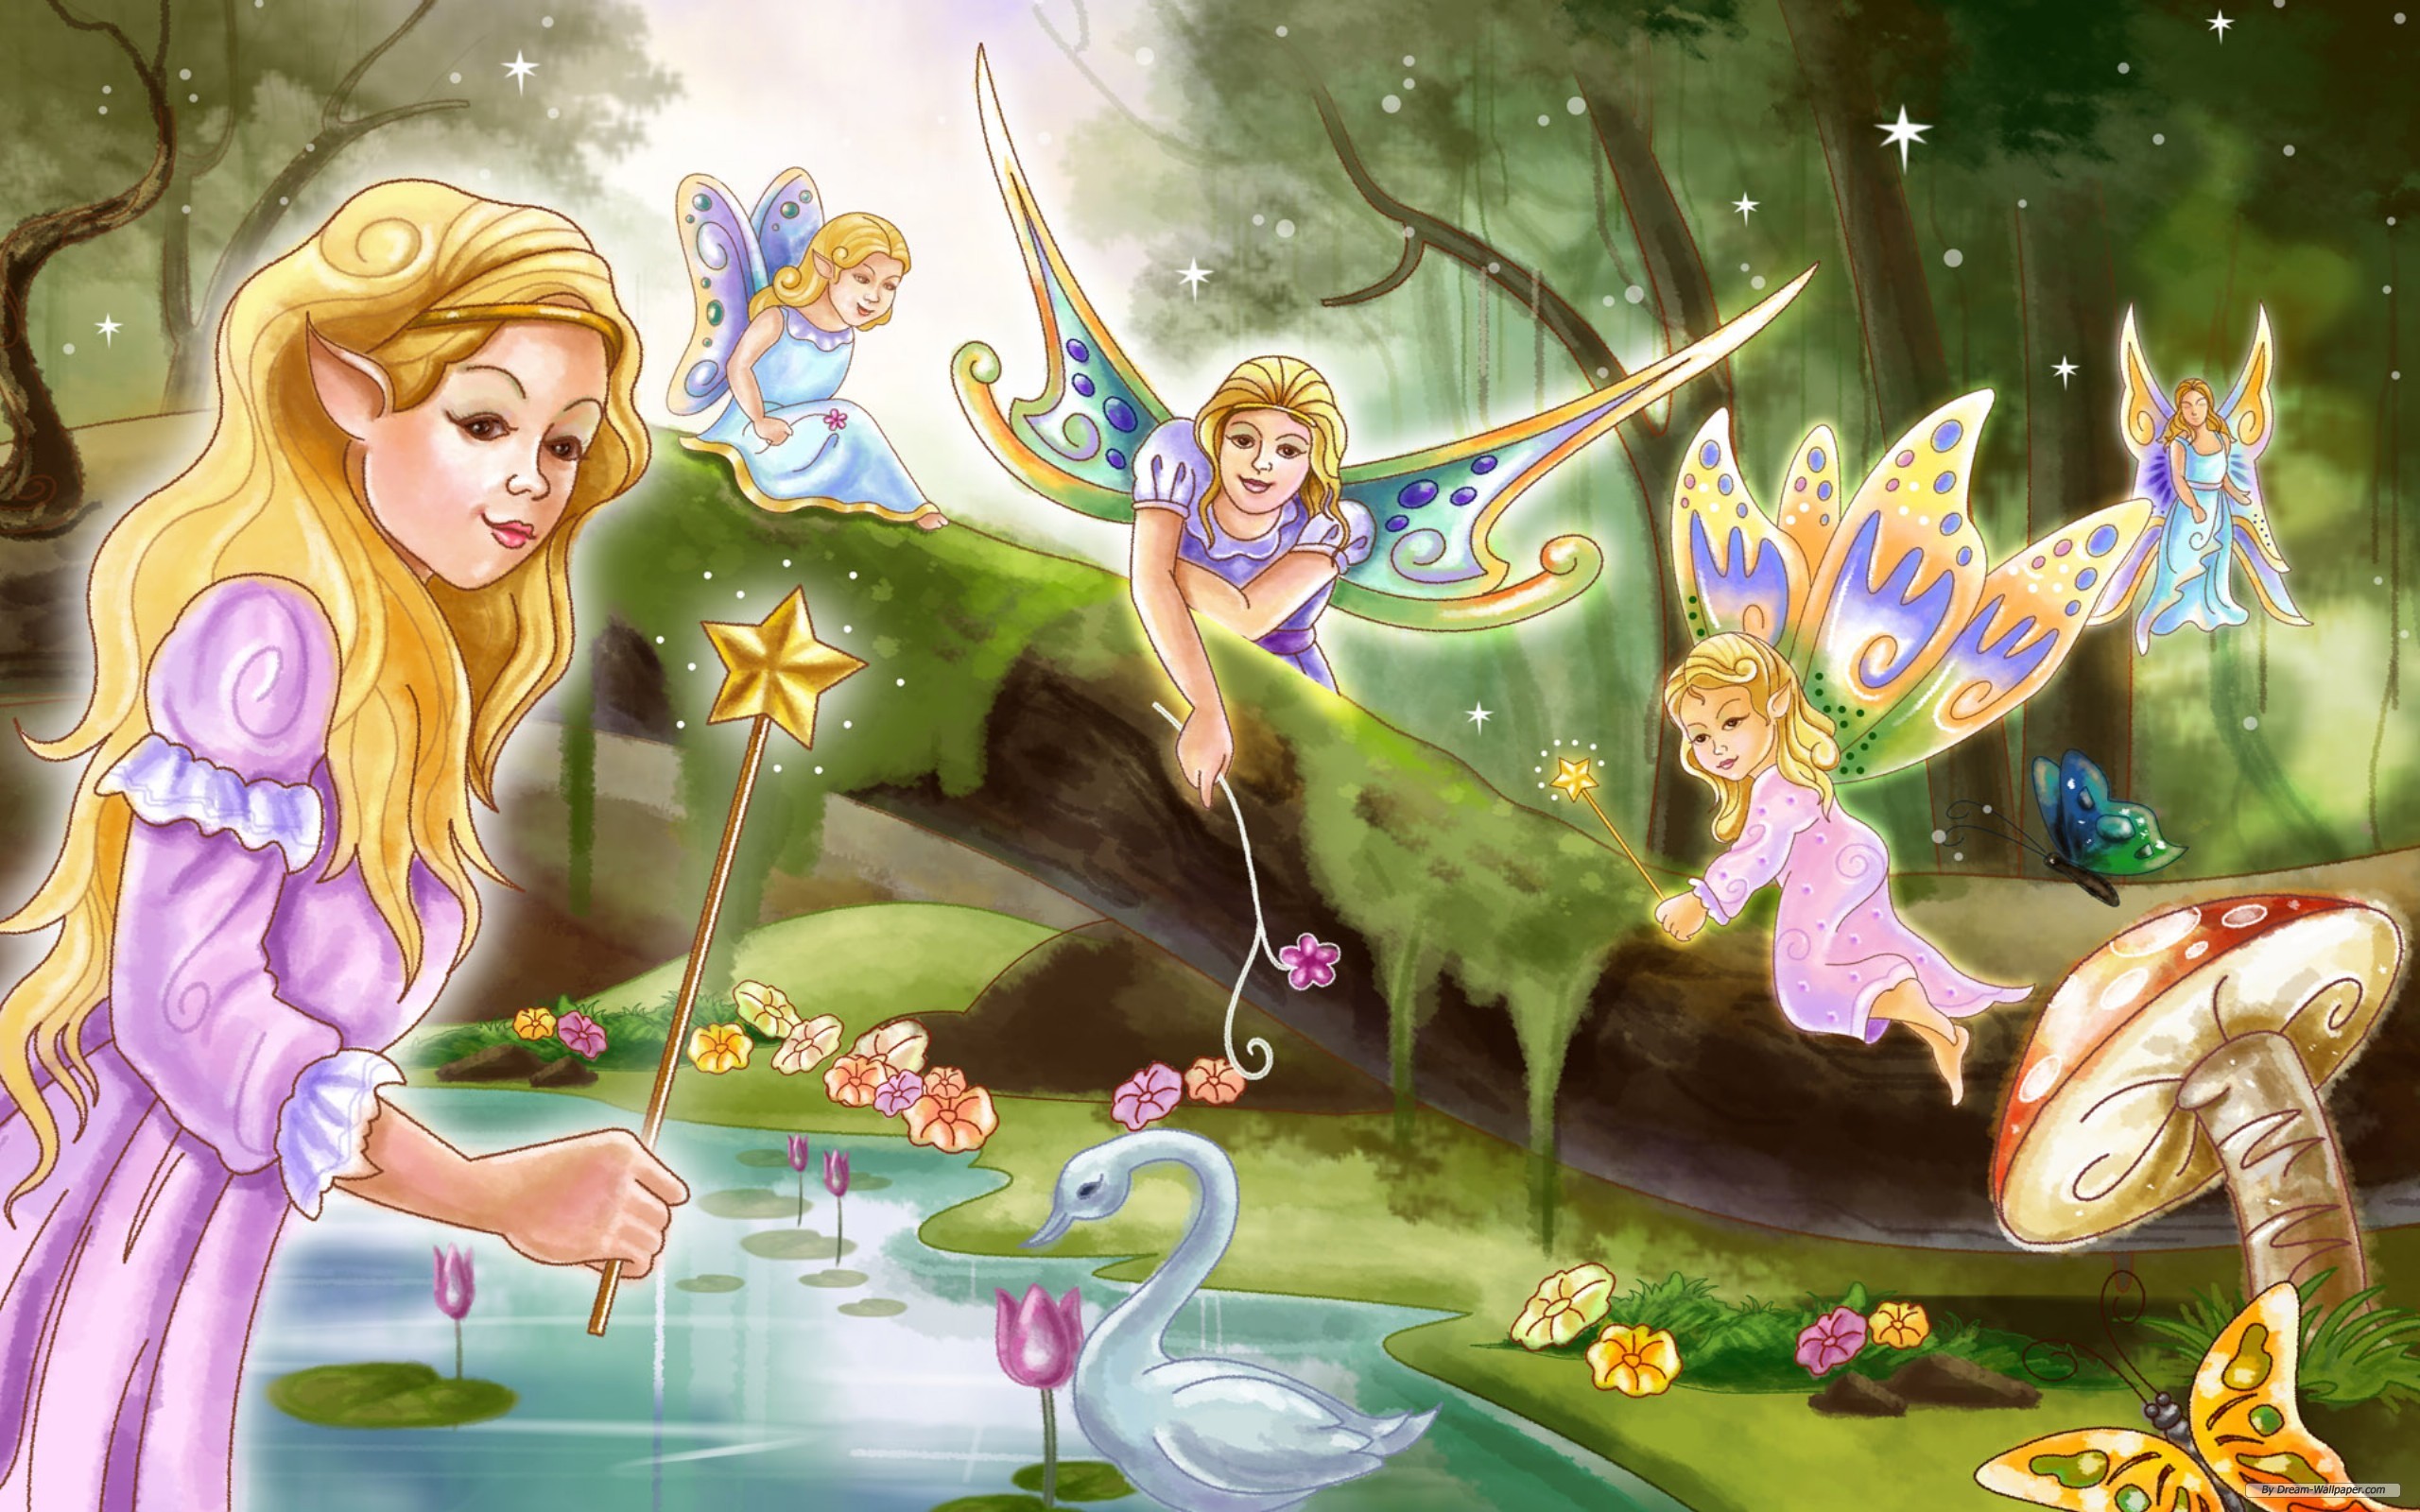 Exquisite fairytale scene featuring a magical fantasy landscape.